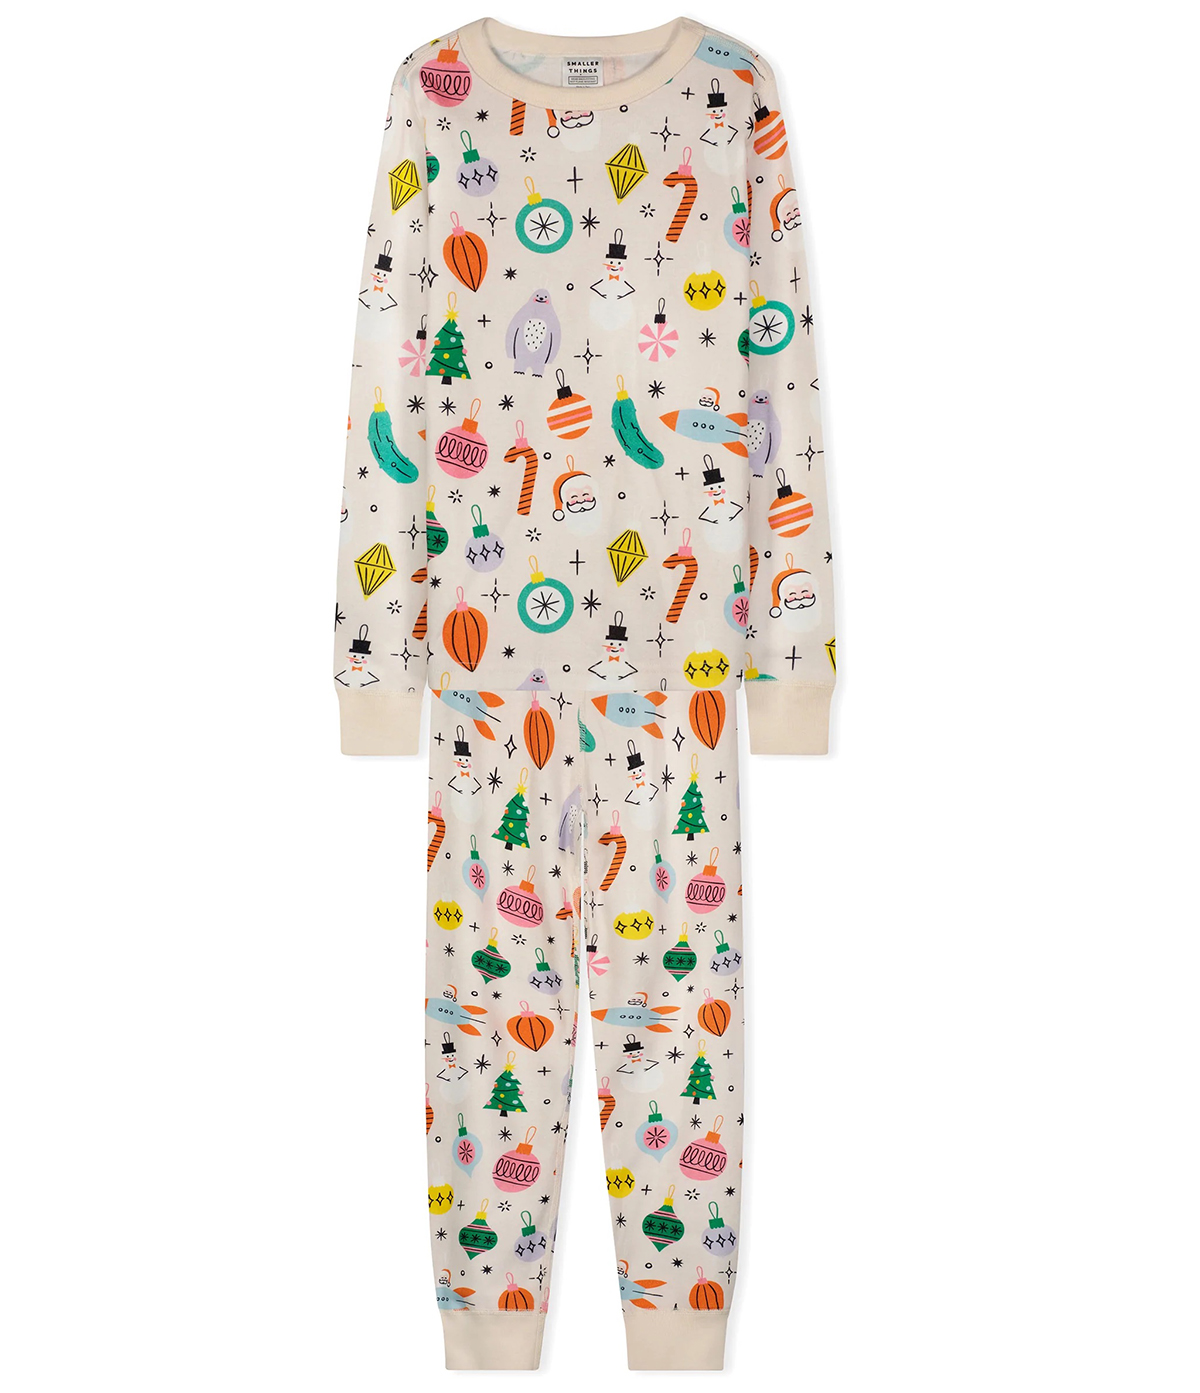 Cute Christmas Pajamas for Kids & Families - Studio DIY